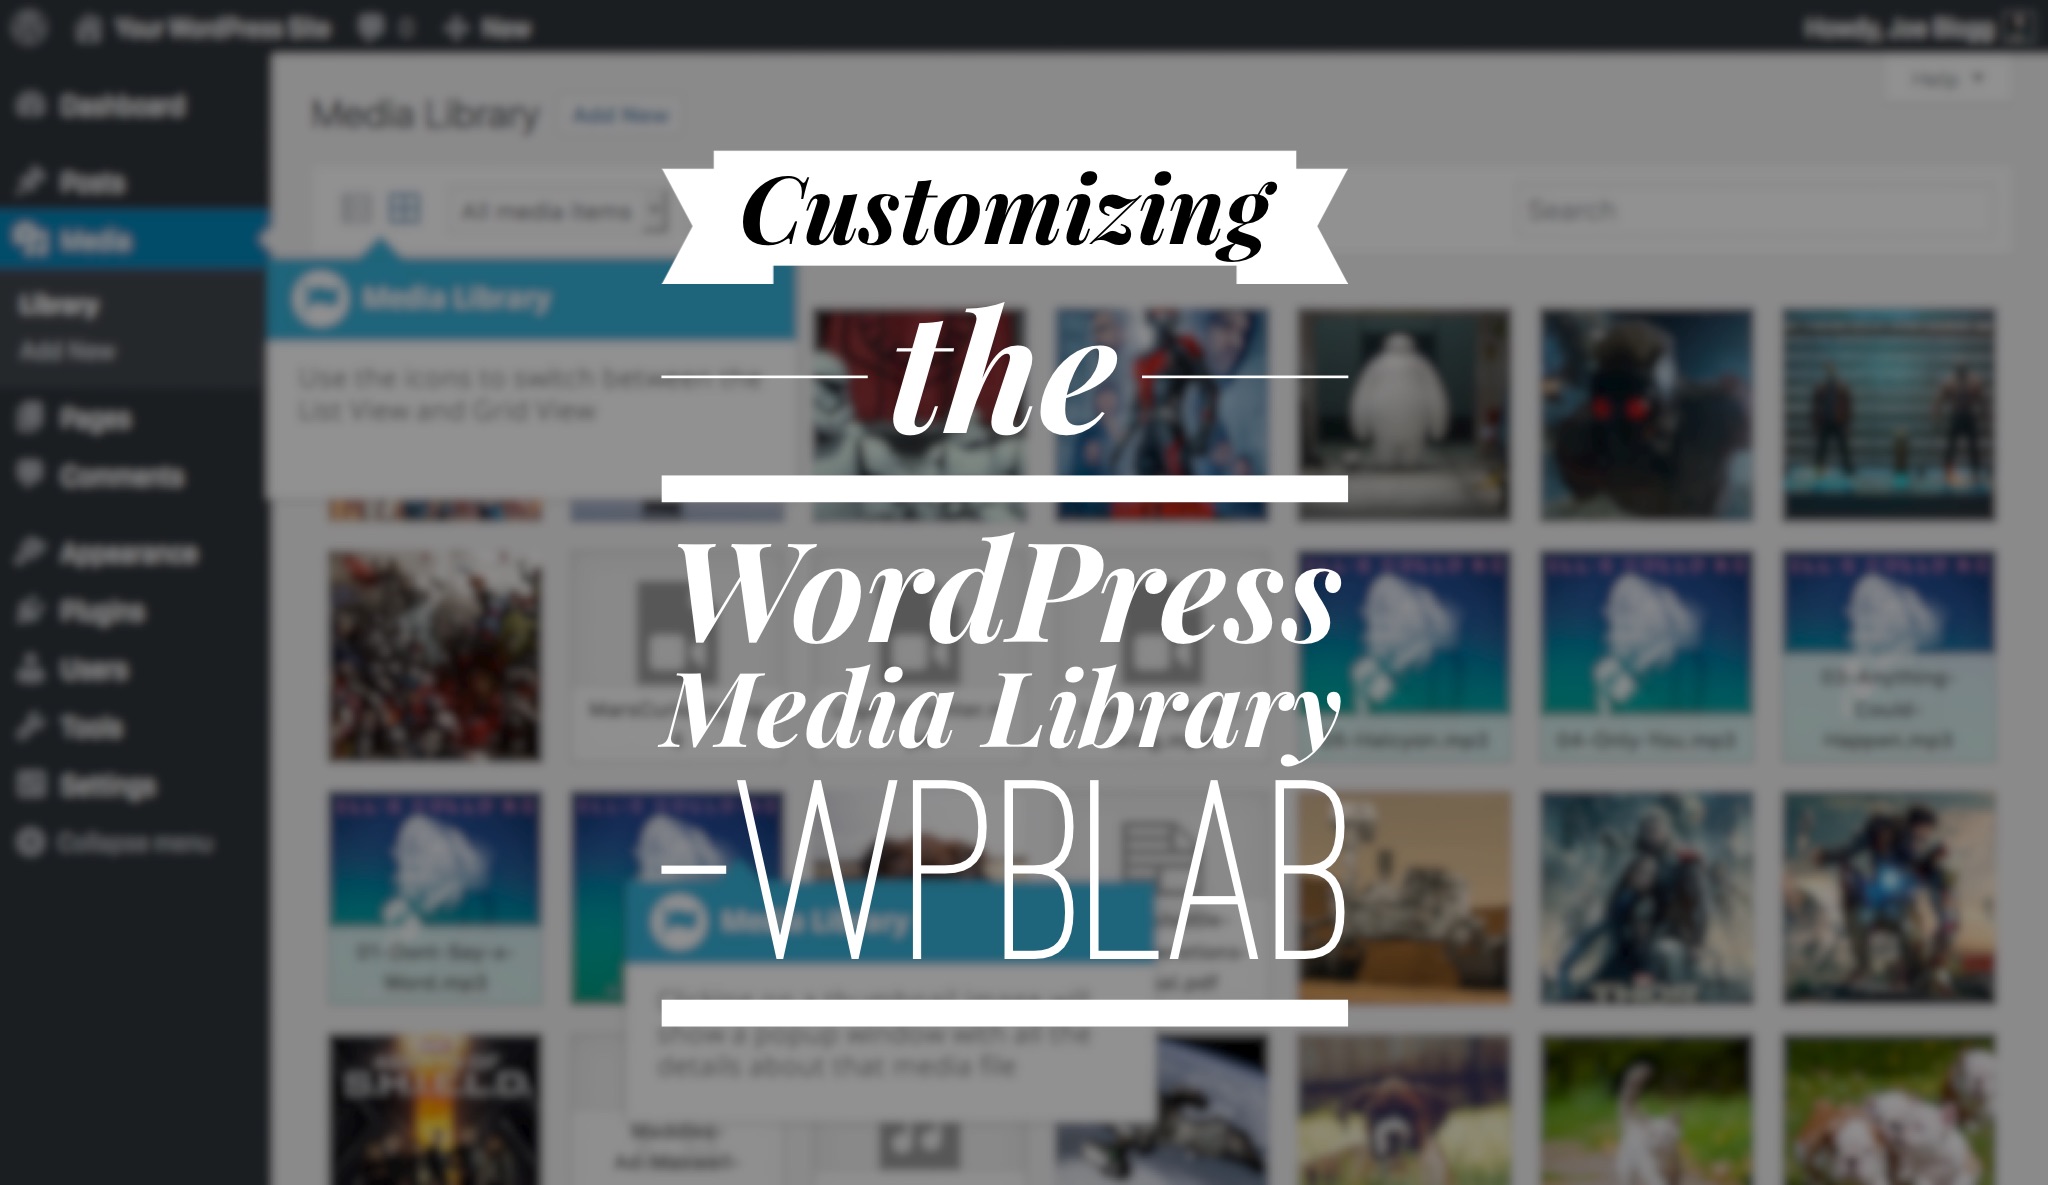 WPblab 050 - Customizing the WordPress Media Library 1